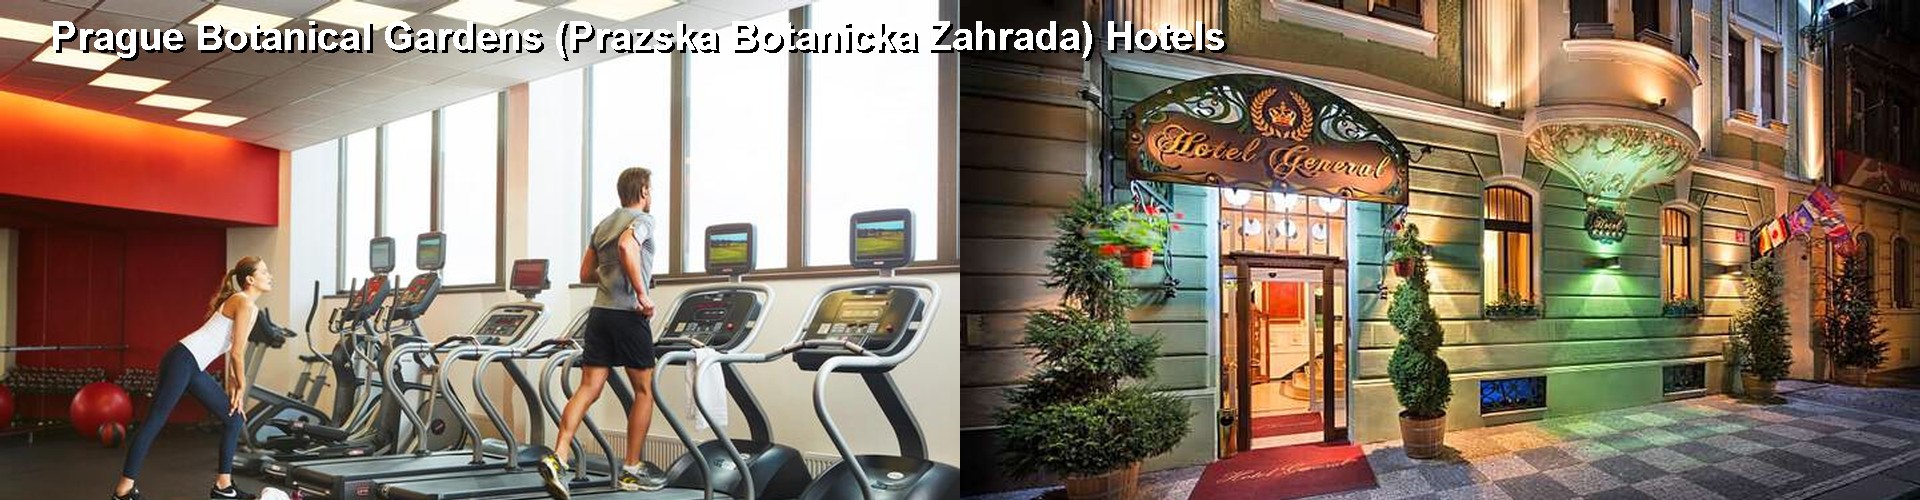 5 Best Hotels near Prague Botanical Gardens (Prazska Botanicka Zahrada)